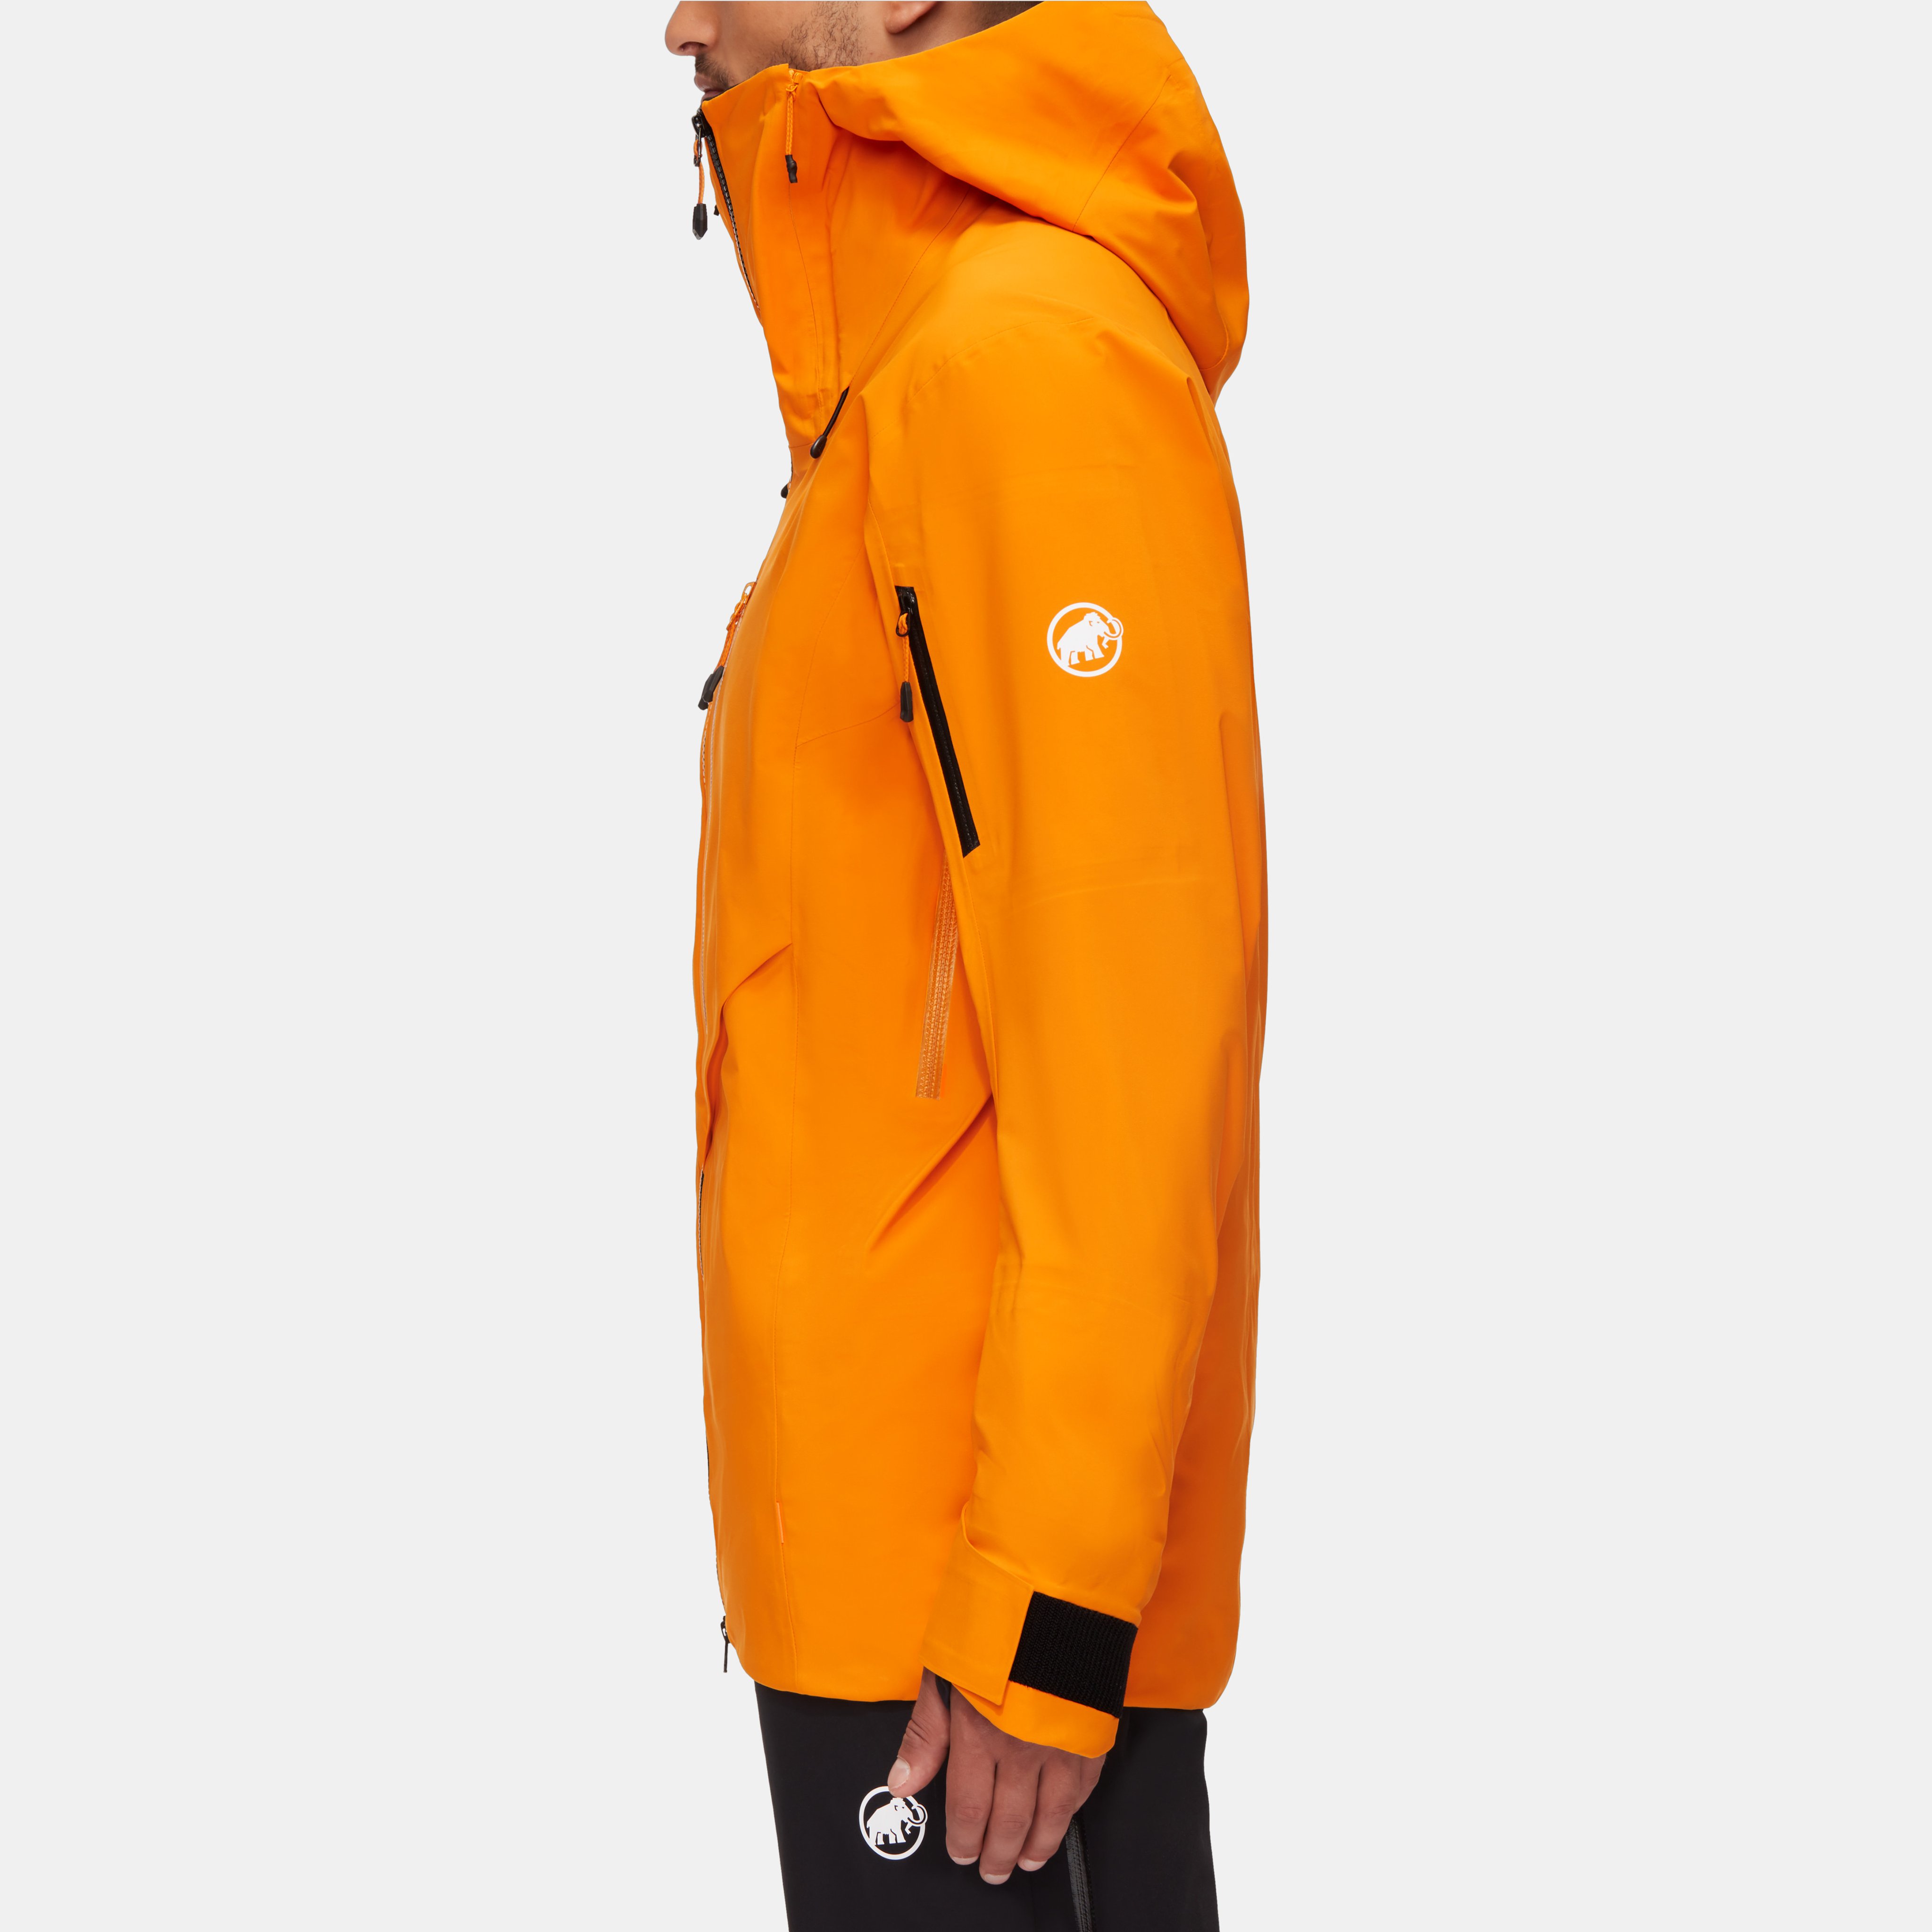 La Liste HS Hooded Jacket Men product image